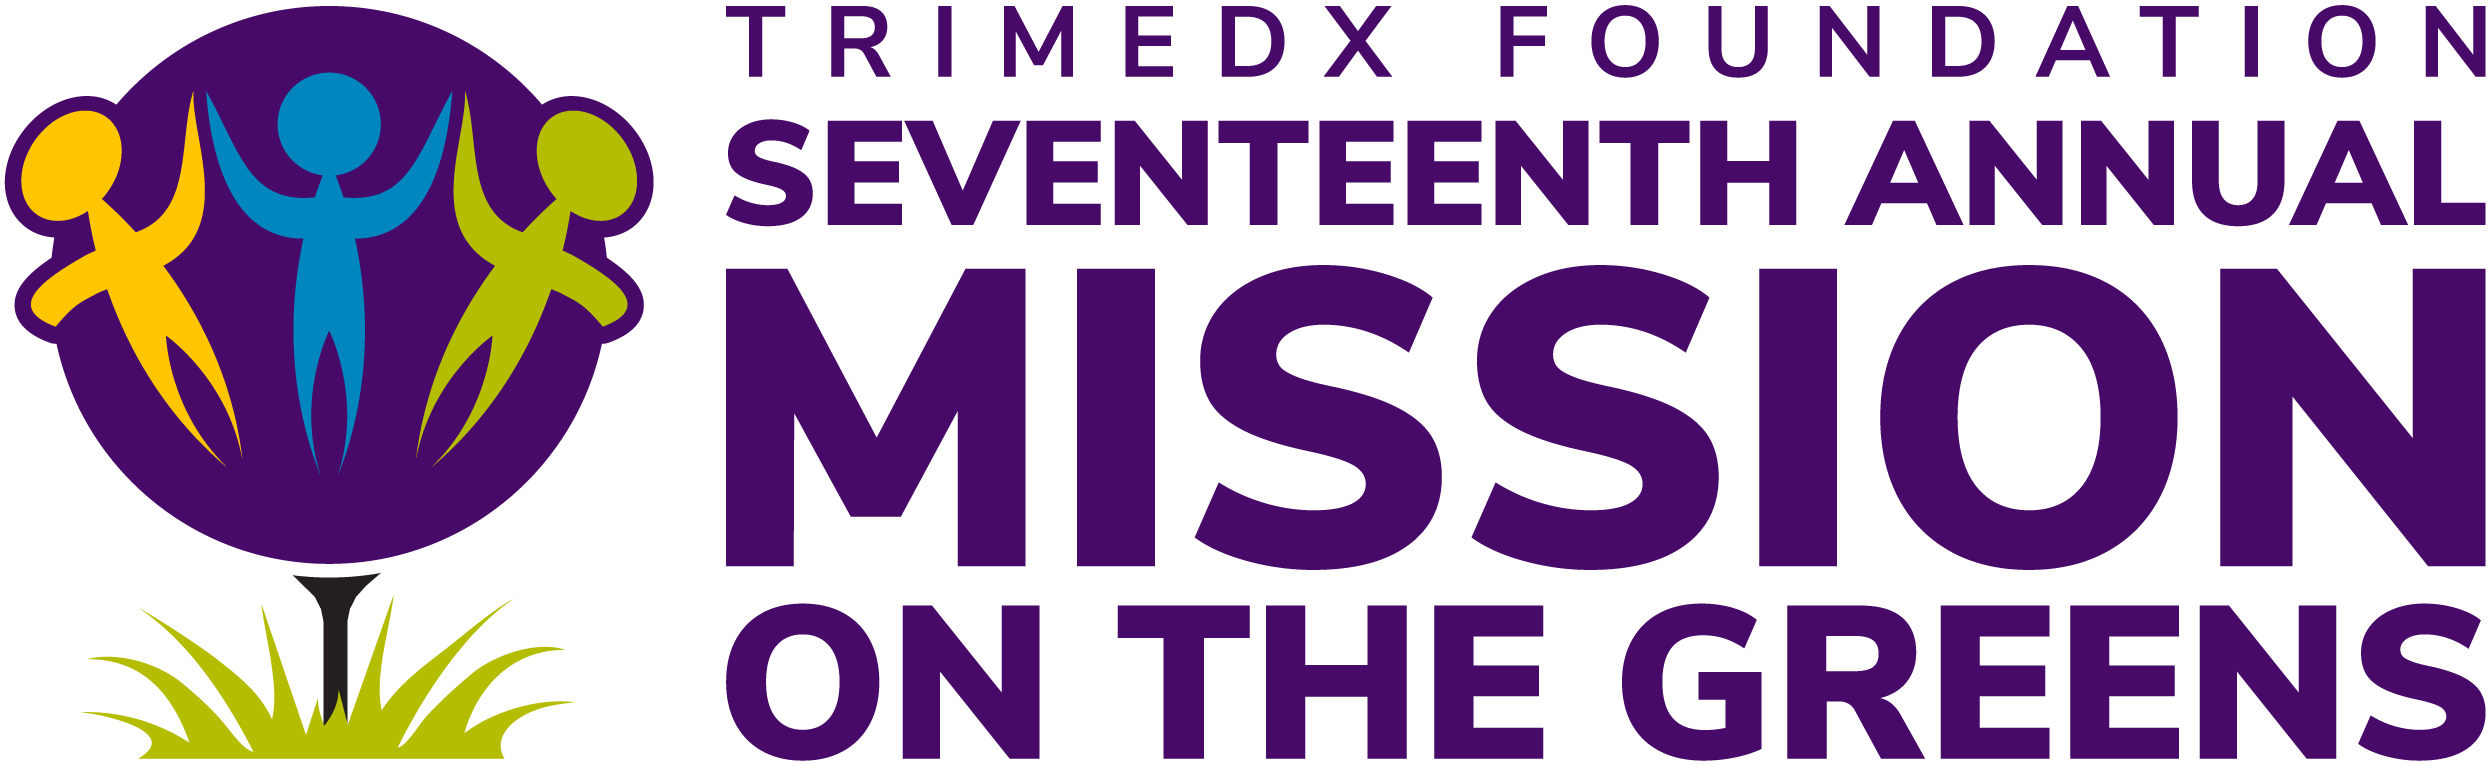 8926-032023 - Logo - TRIMEDX Foundation - 17th Annual MOTG FINAL - RGB DIGITAL_Full Color - No Sponsor